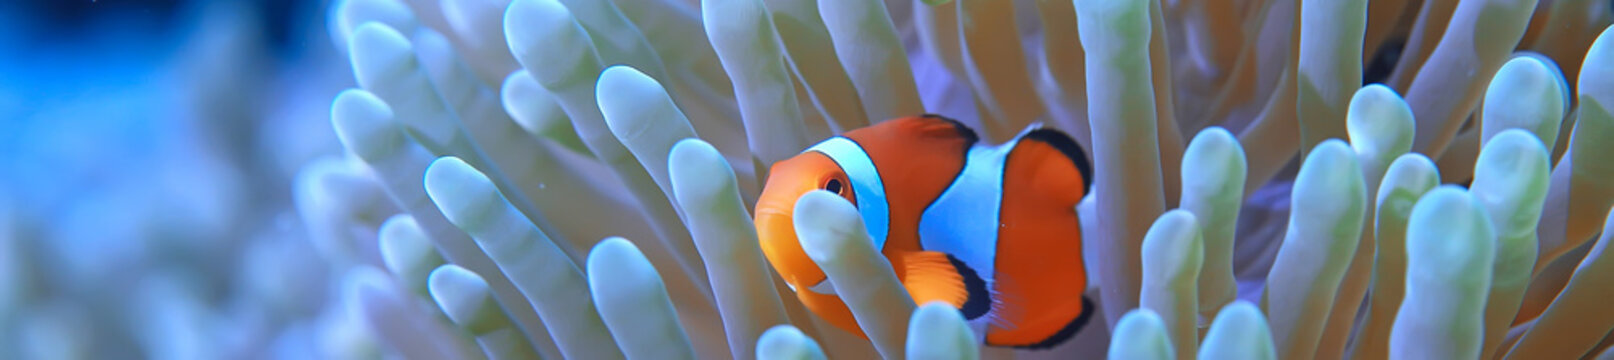 clown fish coral reef / macro underwater scene, view of coral fish, underwater diving